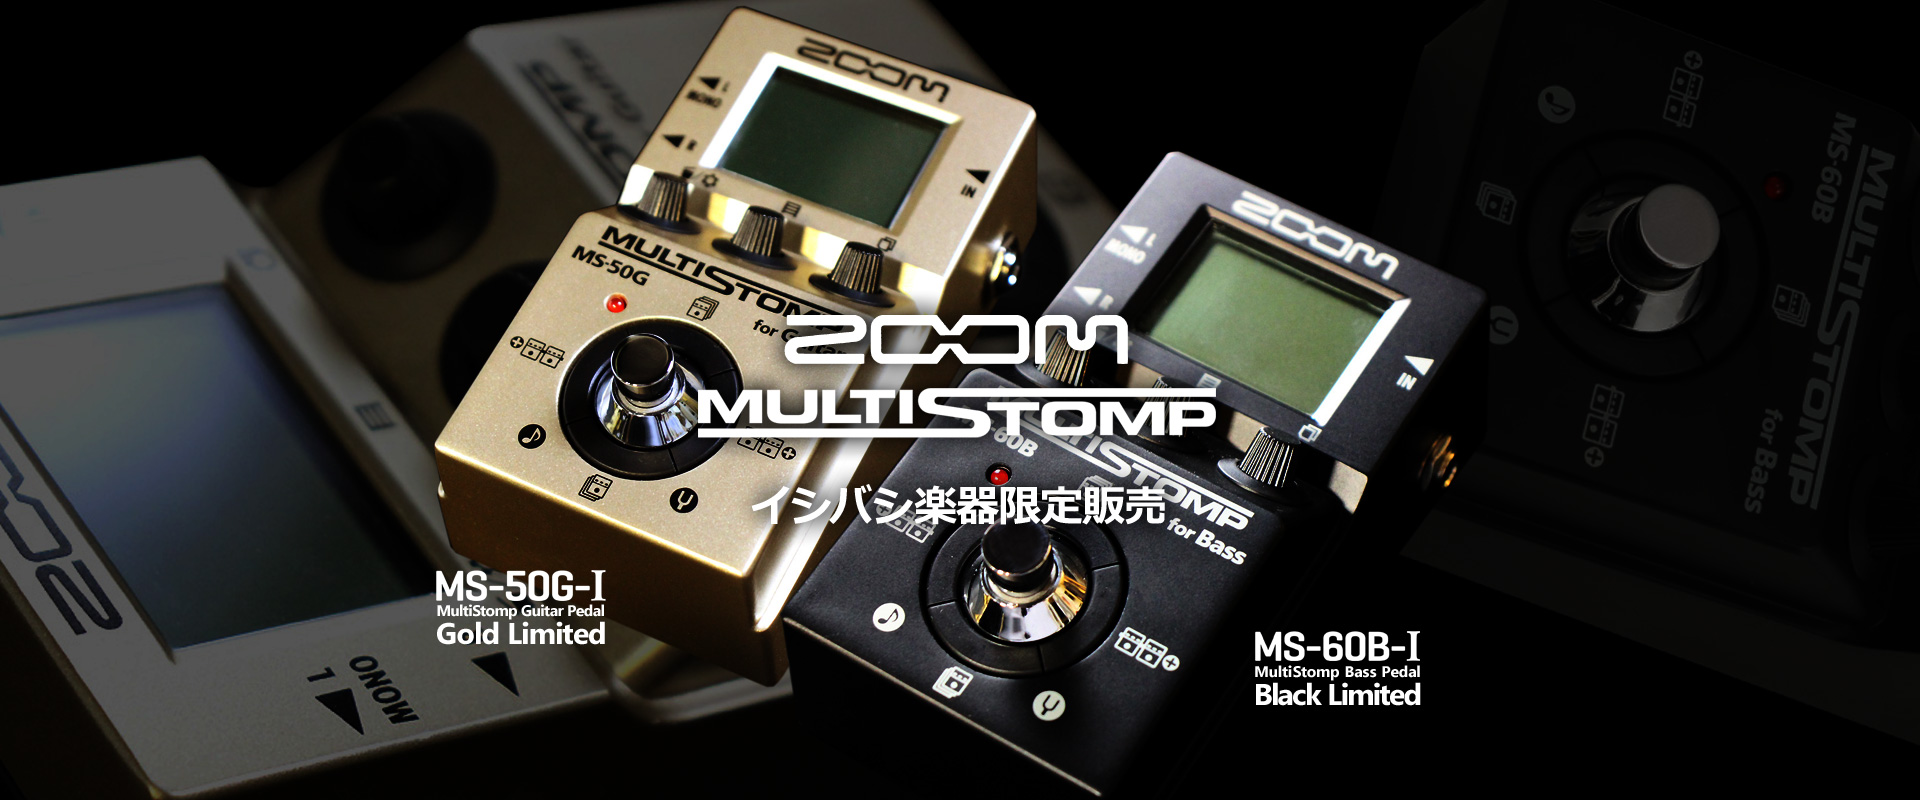 ZOOM MultiStompシリーズ Limited Color Model 「MS-50G-I」/「MS-60B-I」